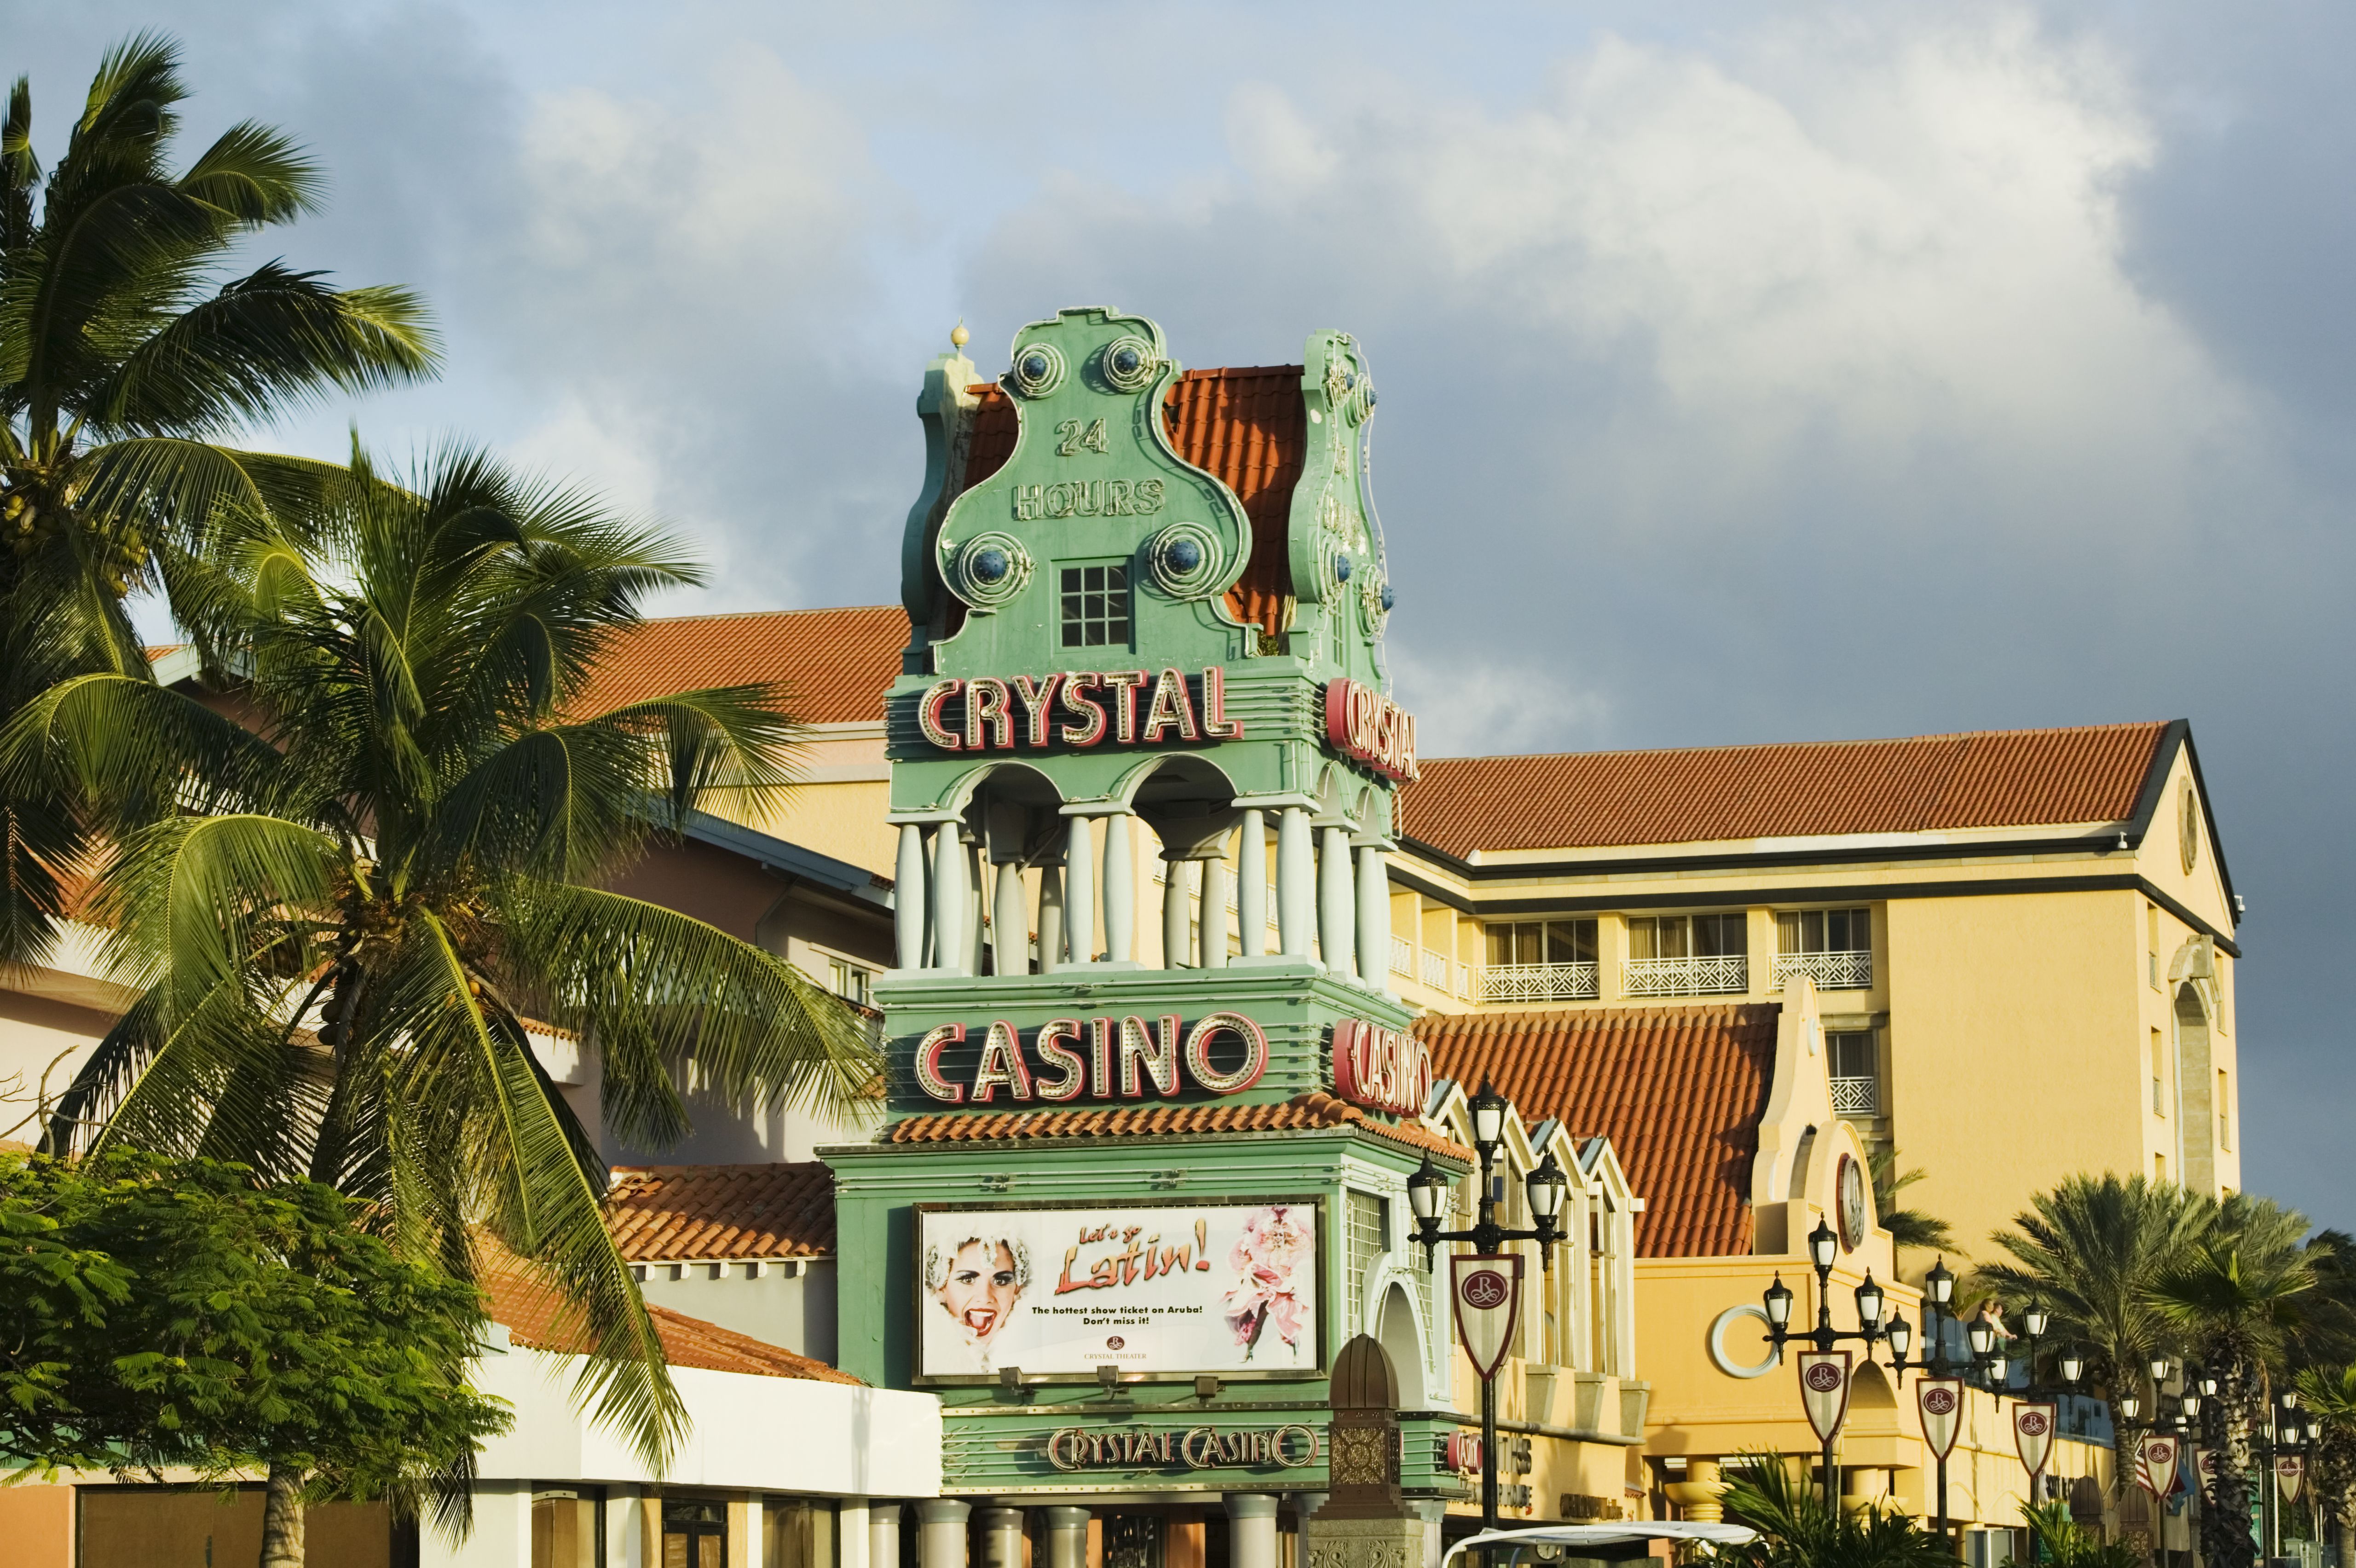 Renaissance Mall / Crystal Casino, Oranjestad, Aruba, Caribbean